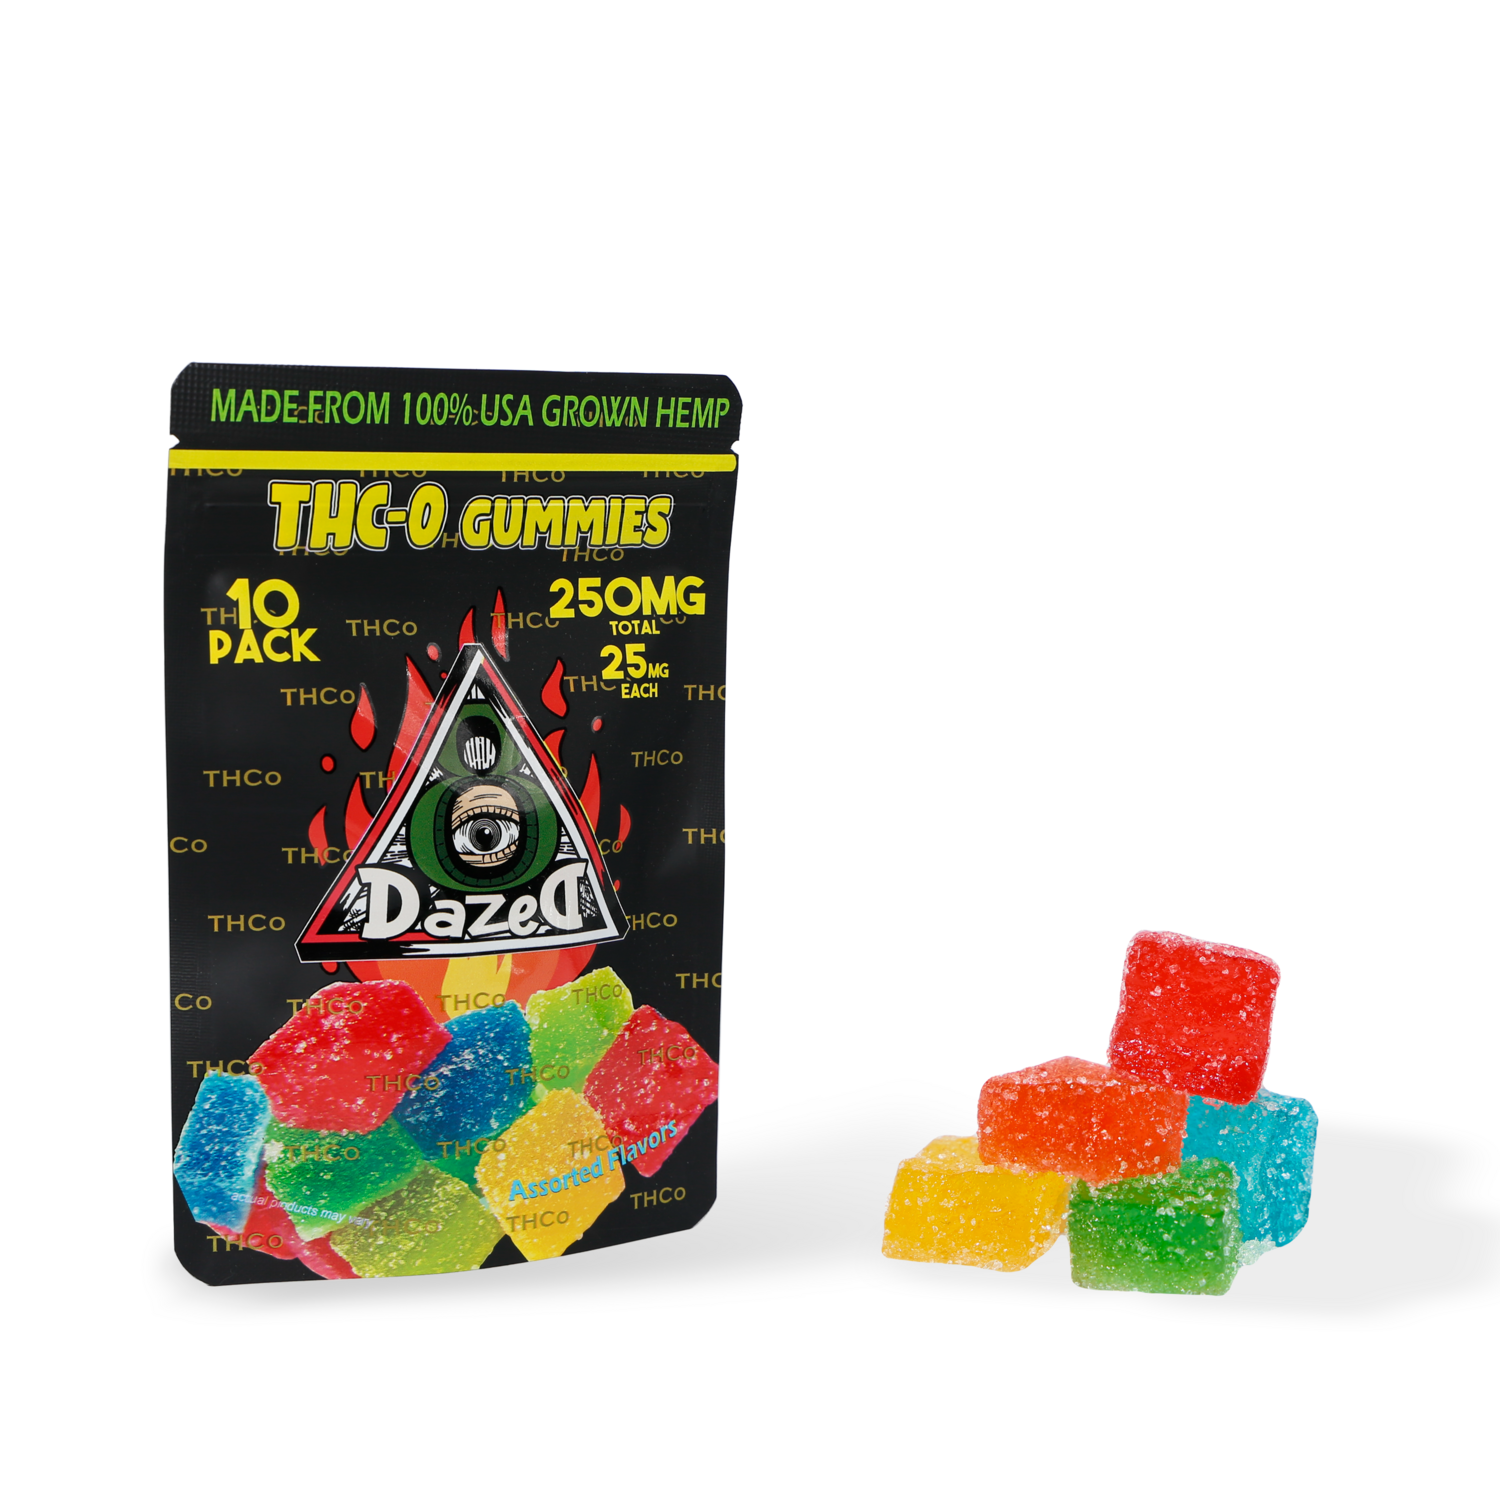 THC-O Gummies (10 pack)